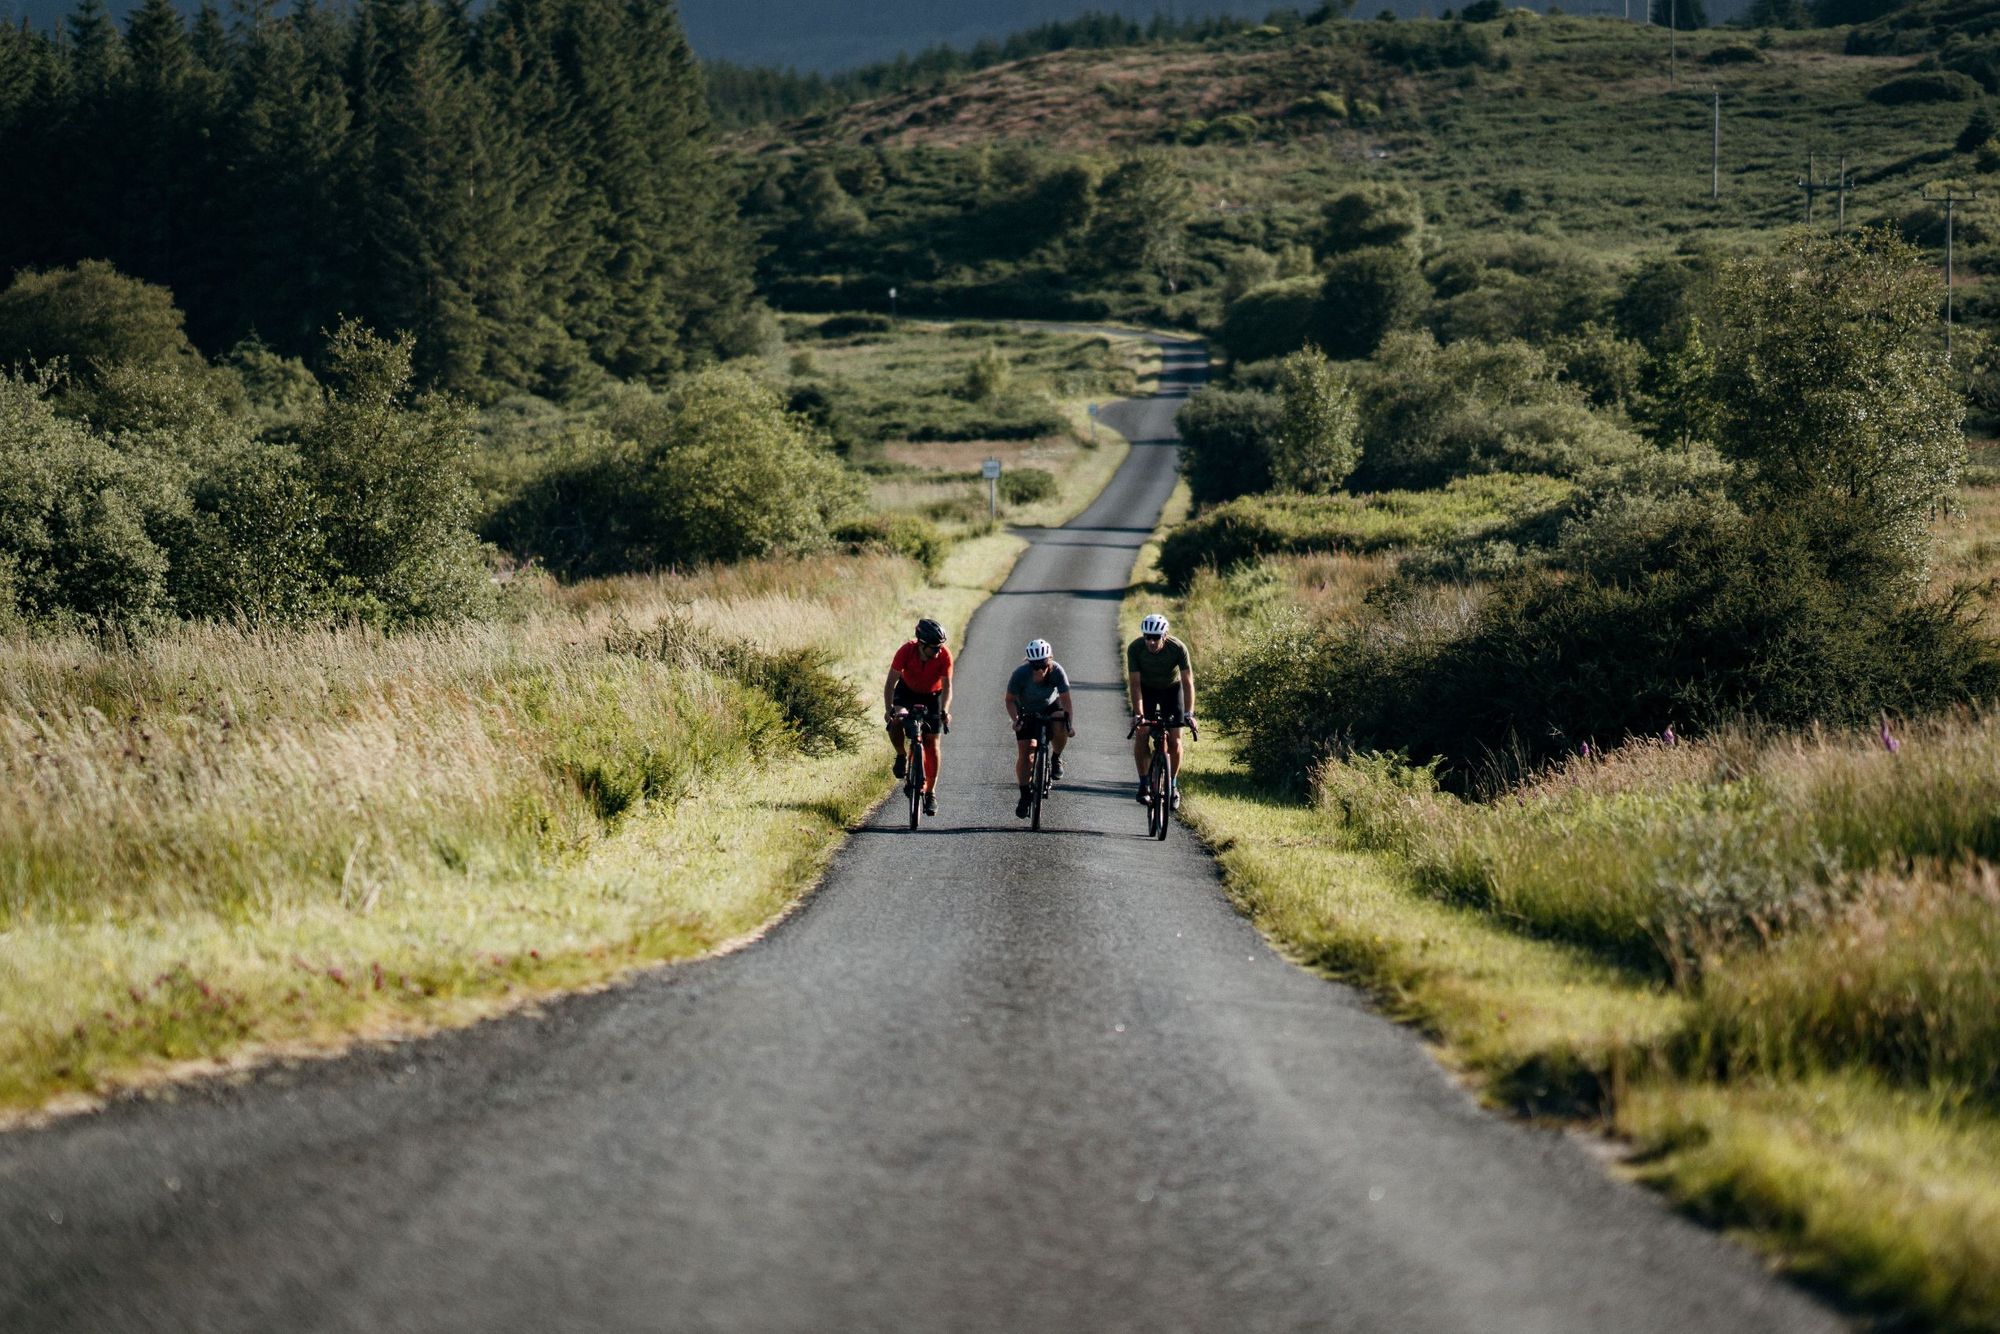 Markus, Jenny and Mark riding through the scenic road network on the west coast of Scotland. Photo: Markus Stitz